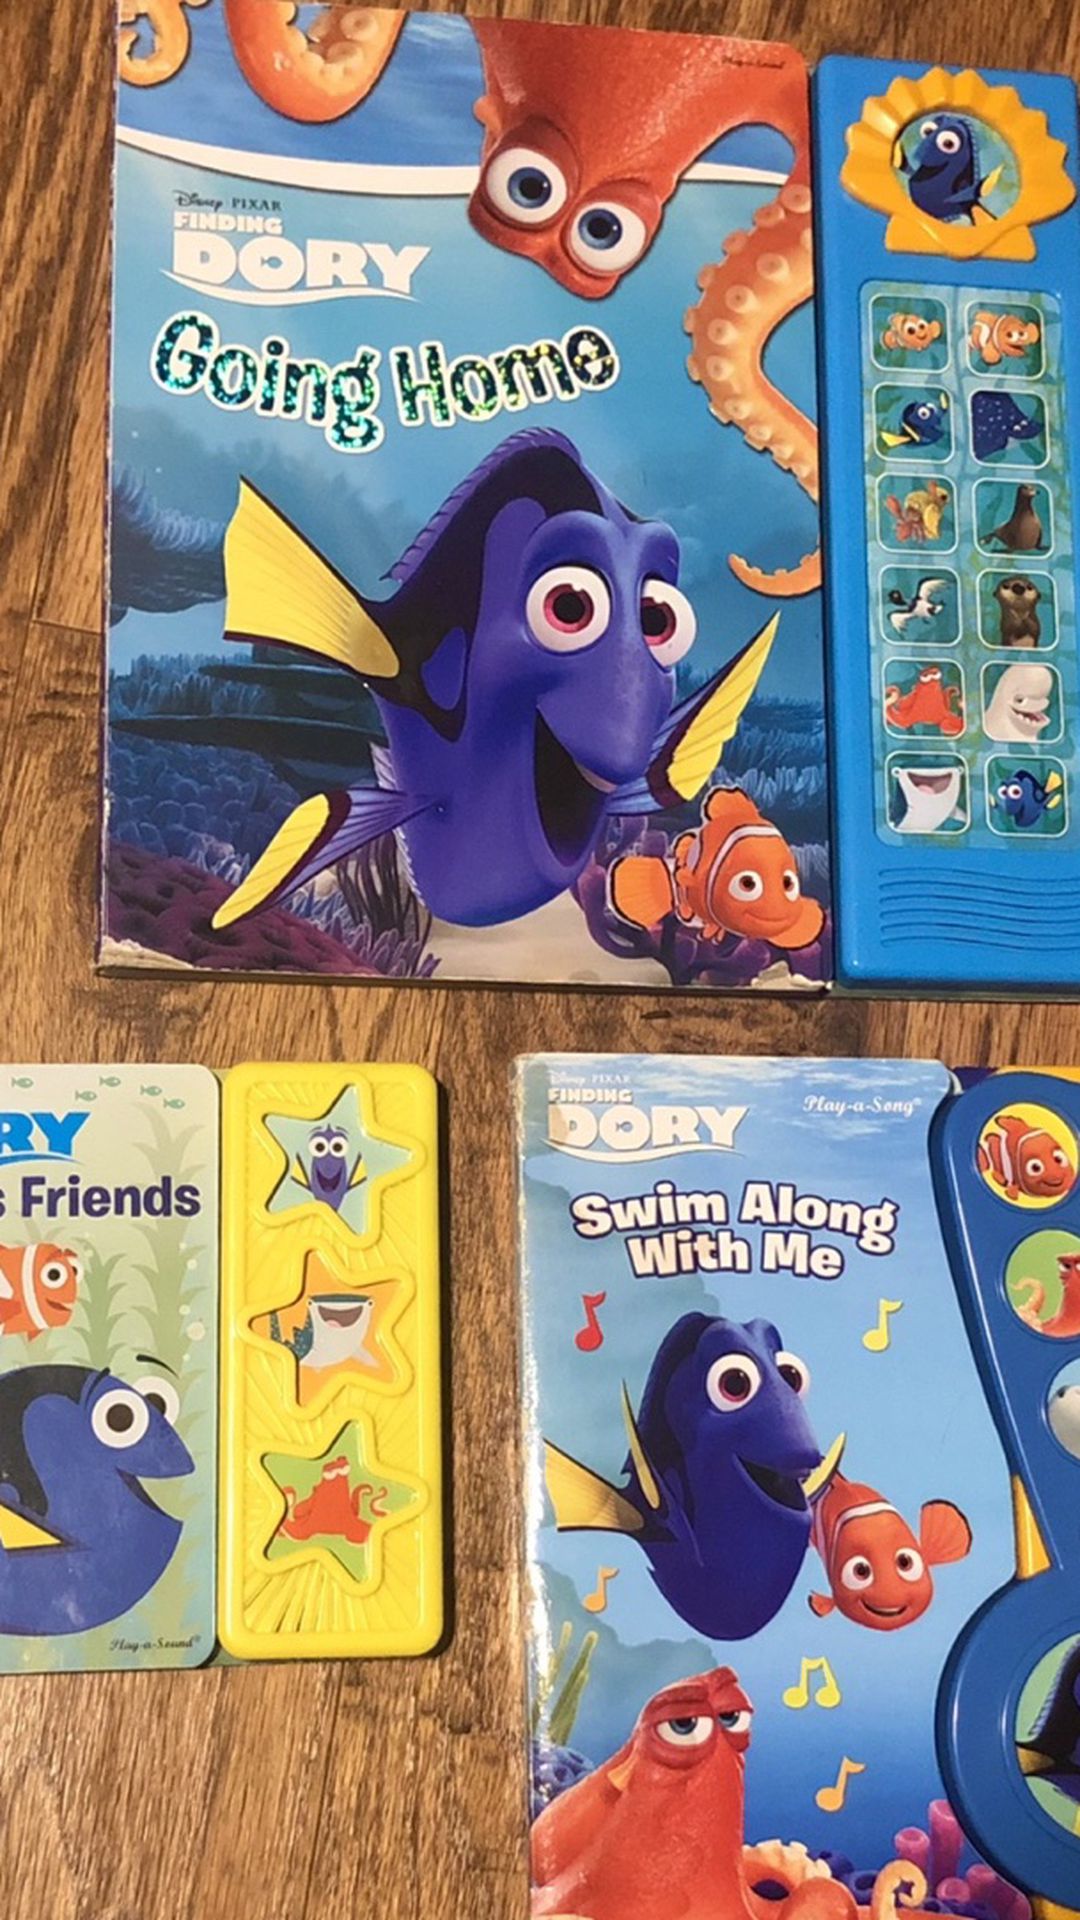 Disney Pixar Finding Dory Sound Books Lot of 3